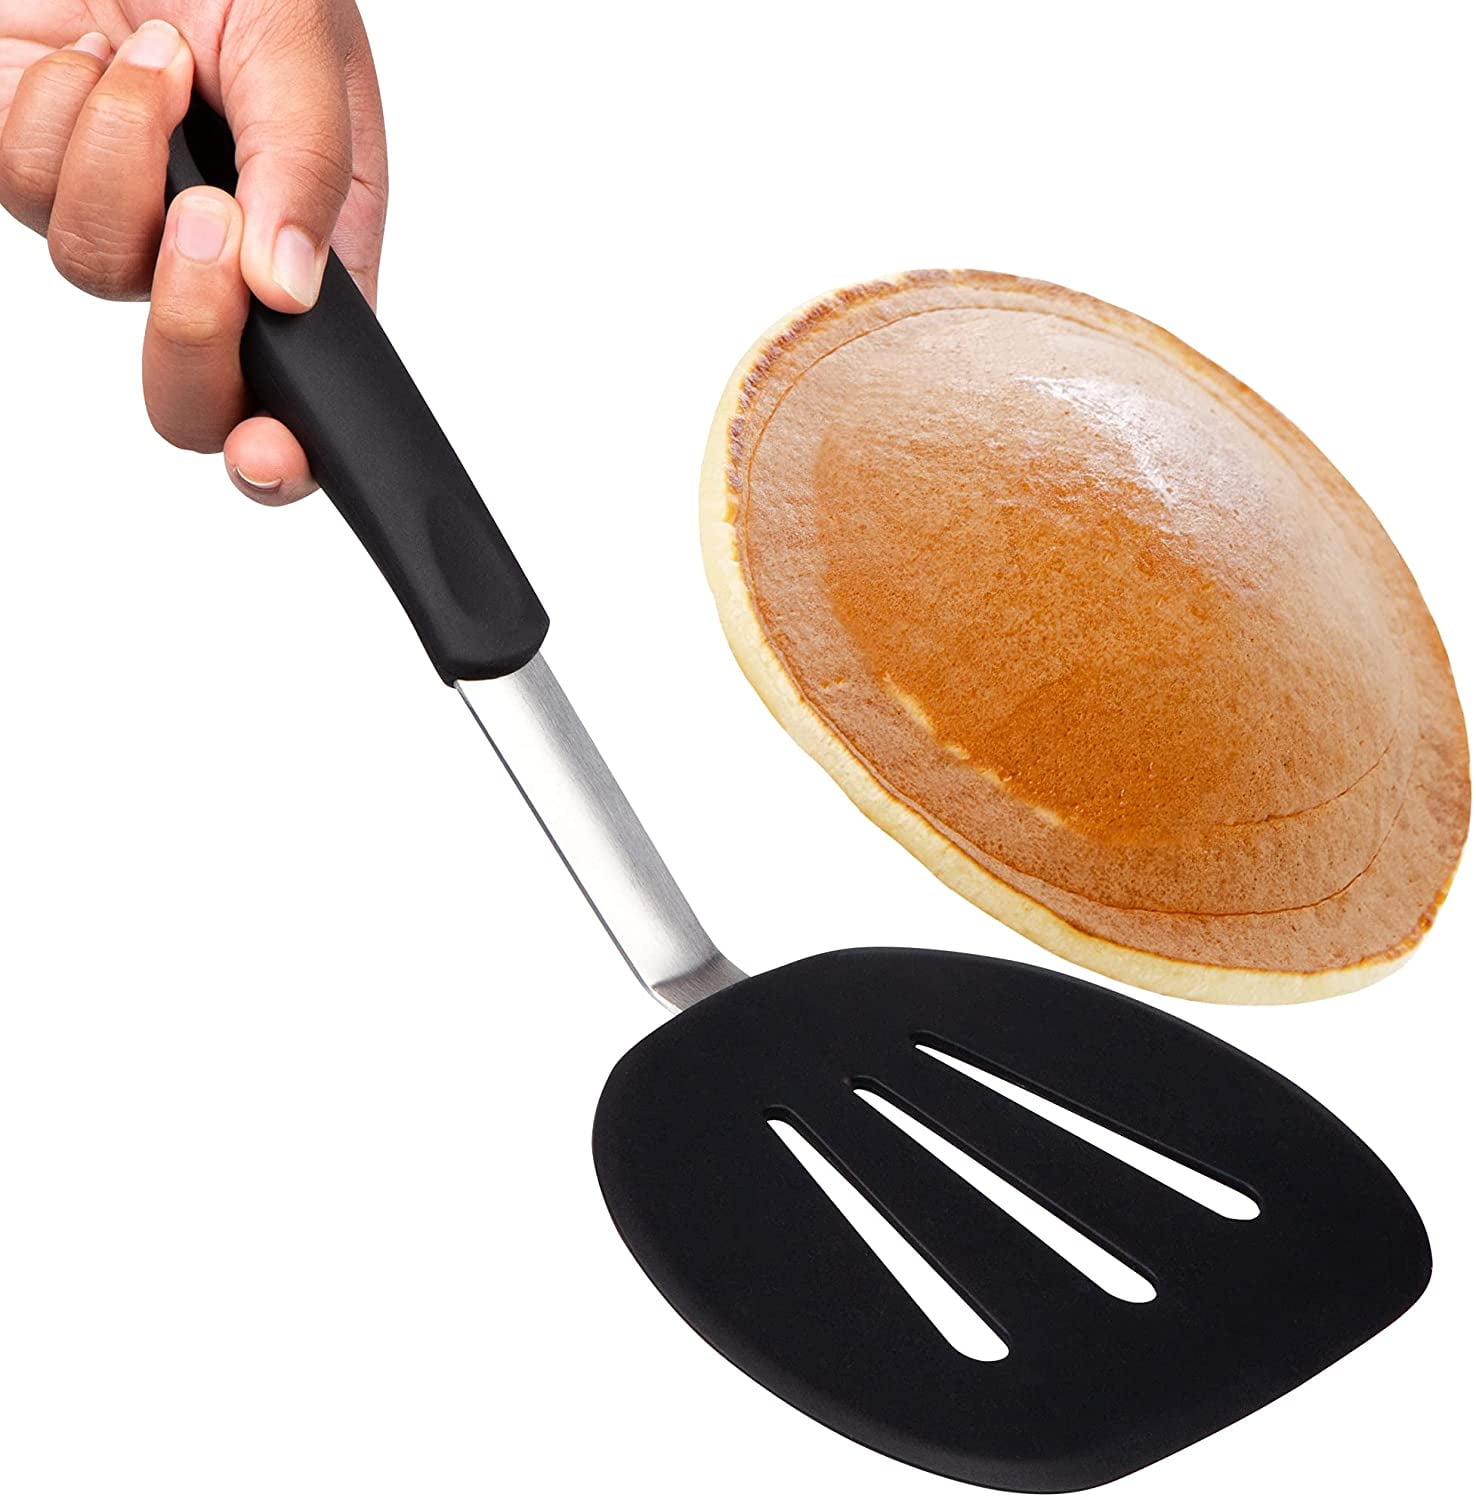 Kitchen Mama Platinum Silicone Pancake Turner- Heat-Resistant, Wide & Slotted Spatula